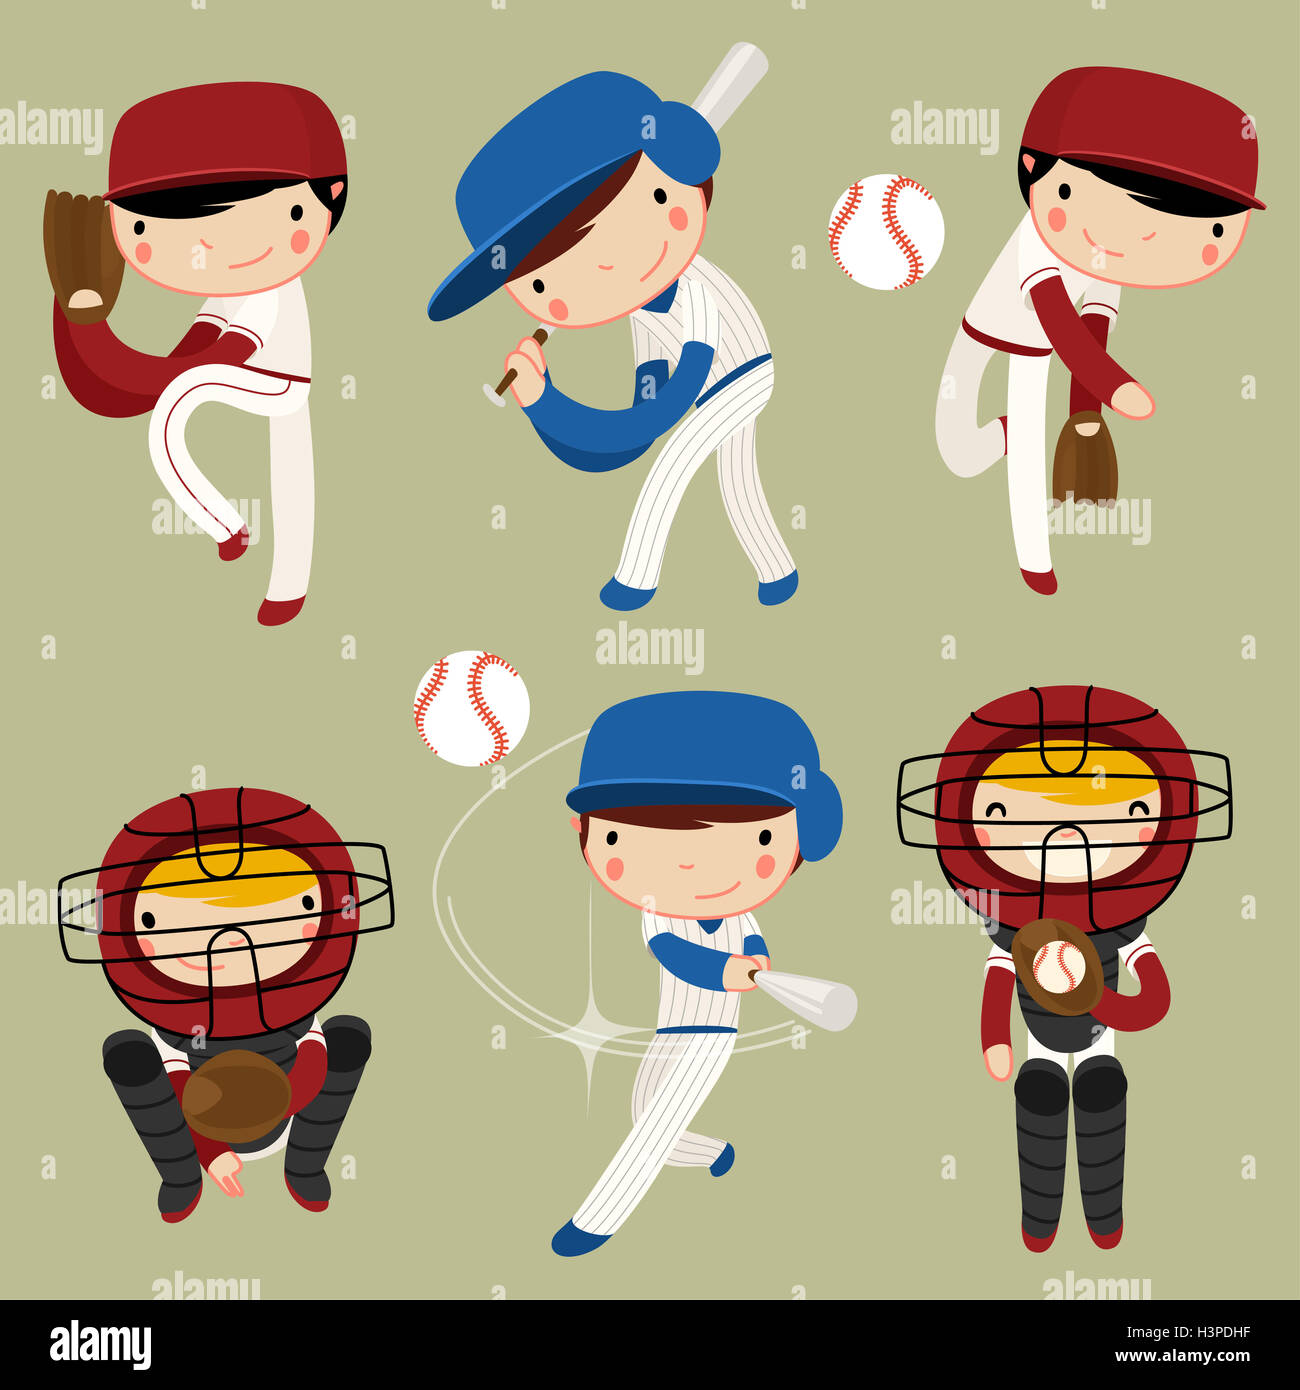 Les enfants de baseball de caractères. vector illustration Banque D'Images